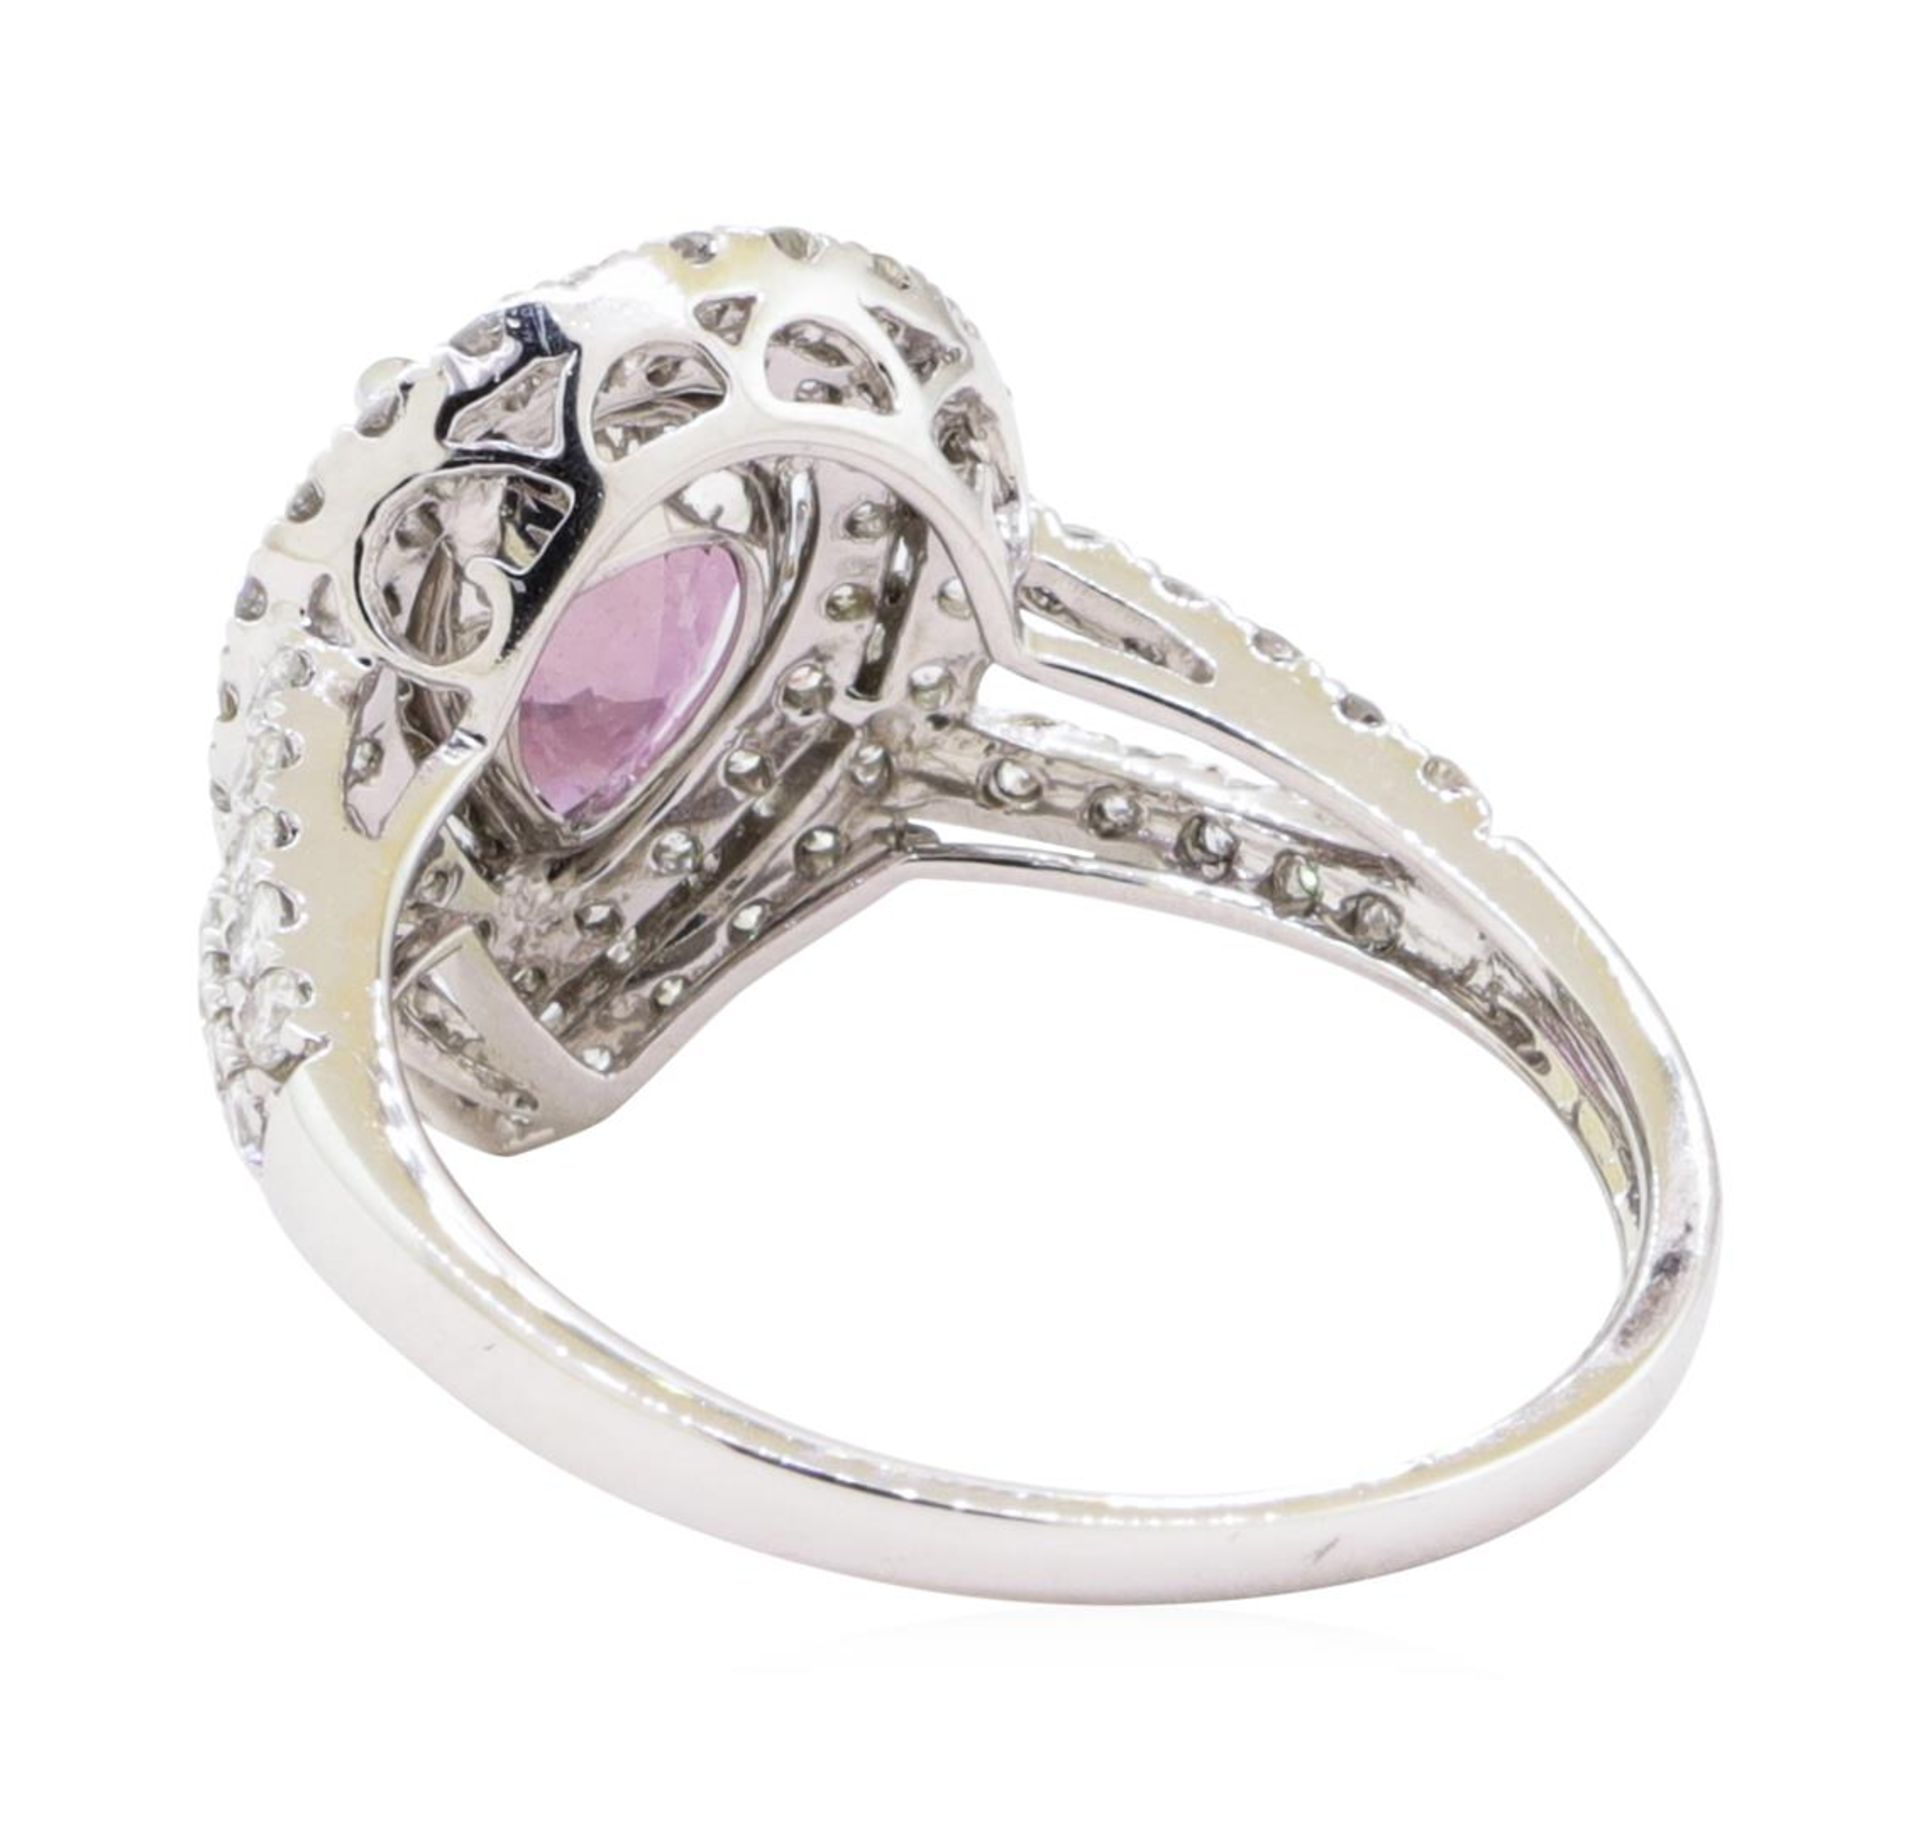 2.05 ctw Pink Sapphire and Diamond Ring - Platinum - Image 3 of 4